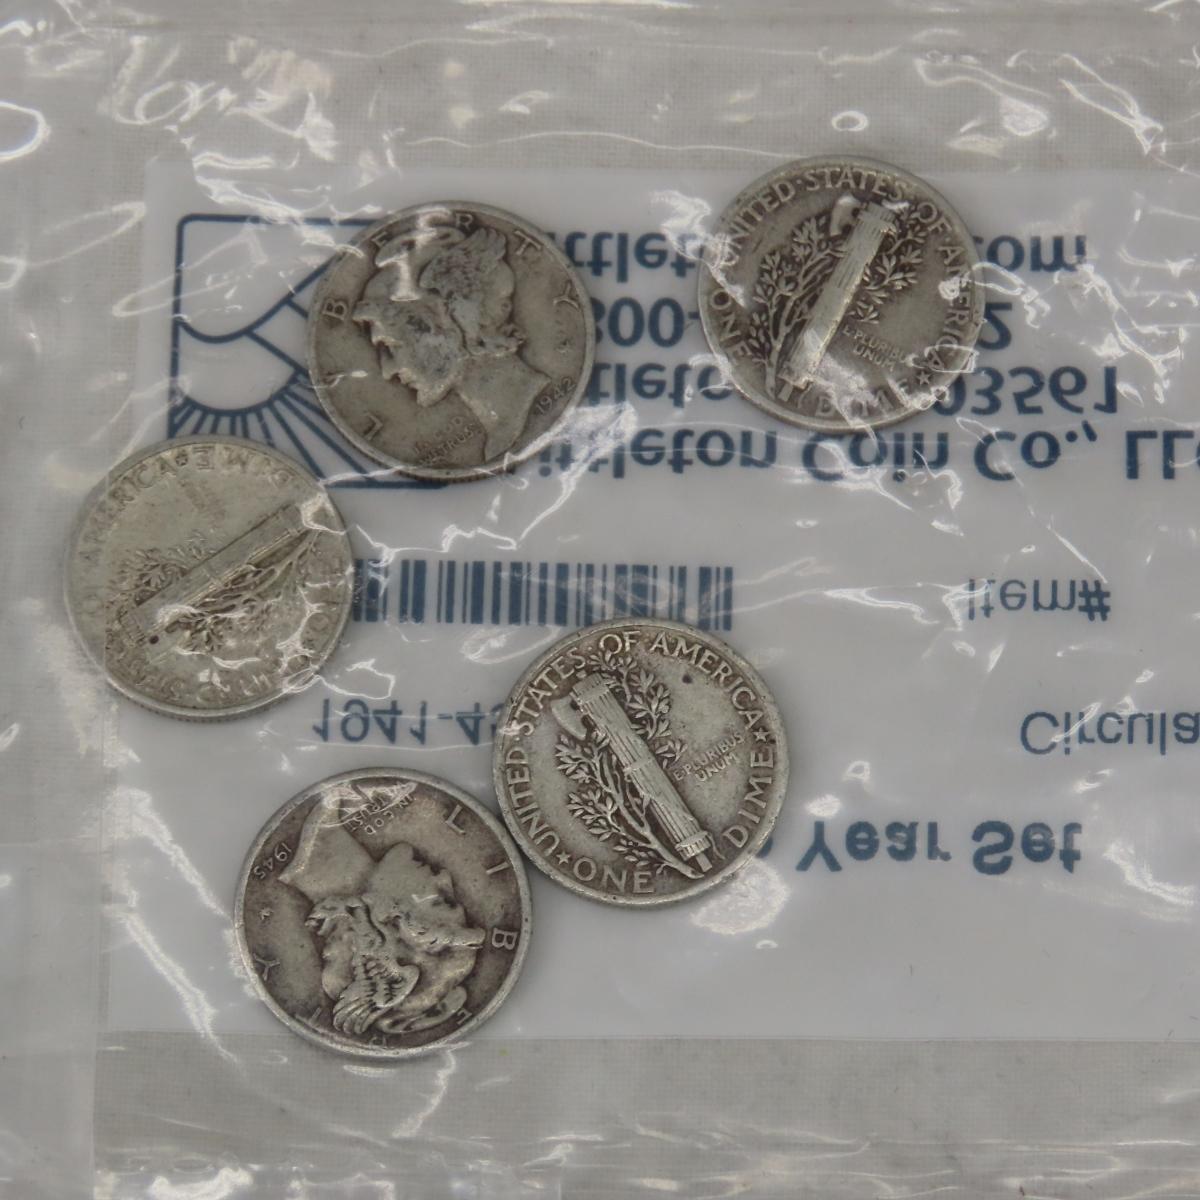 6 1941-1945 Mercury Dime Year Sets Littleton Coin